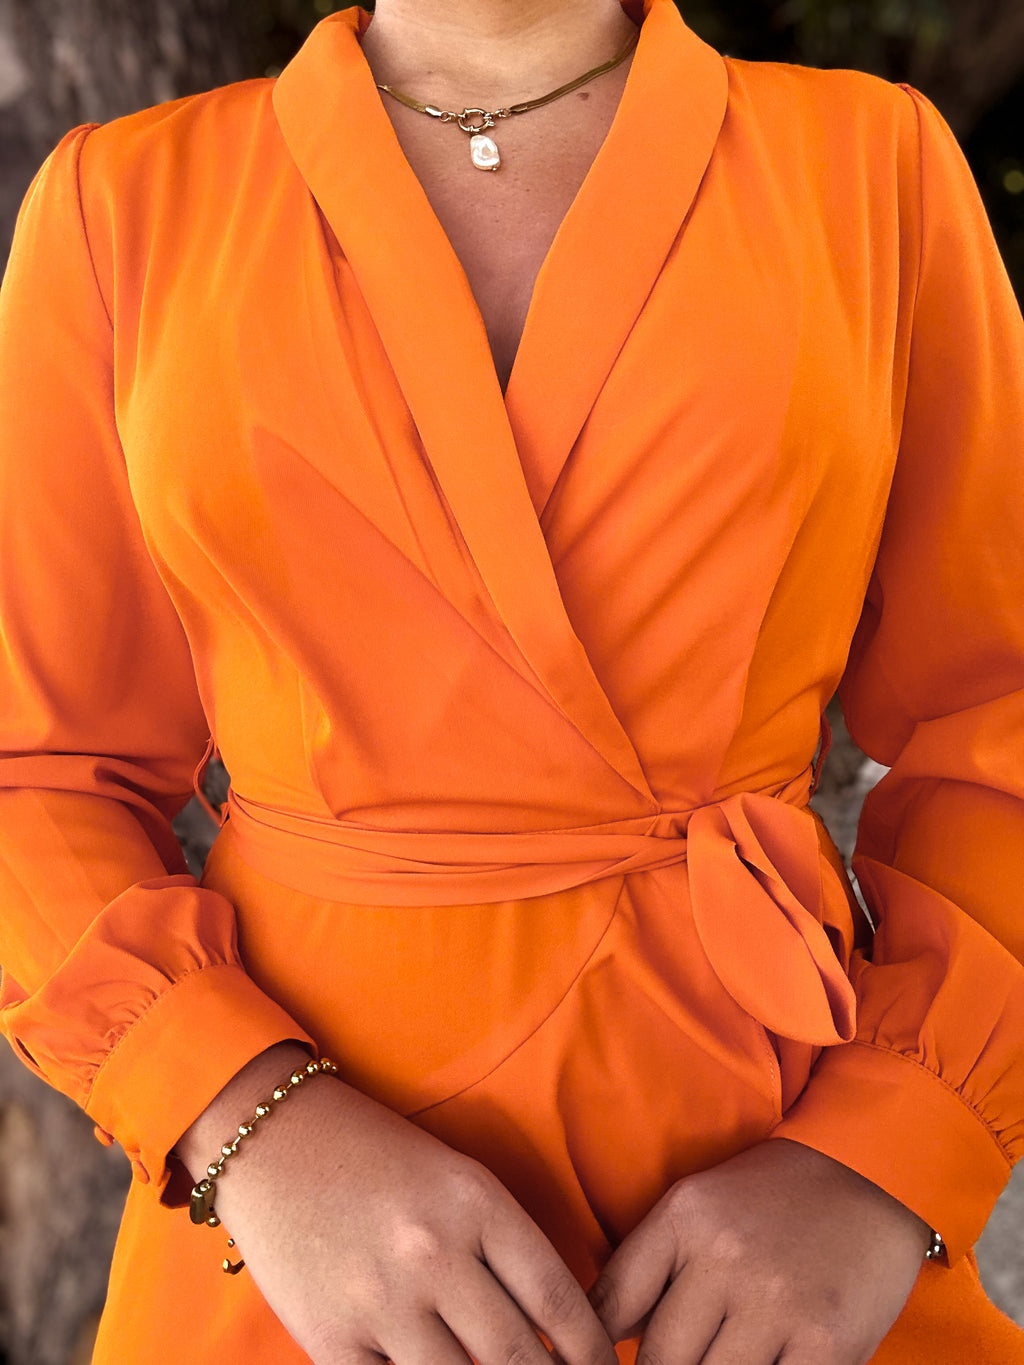 Orange Short Dress